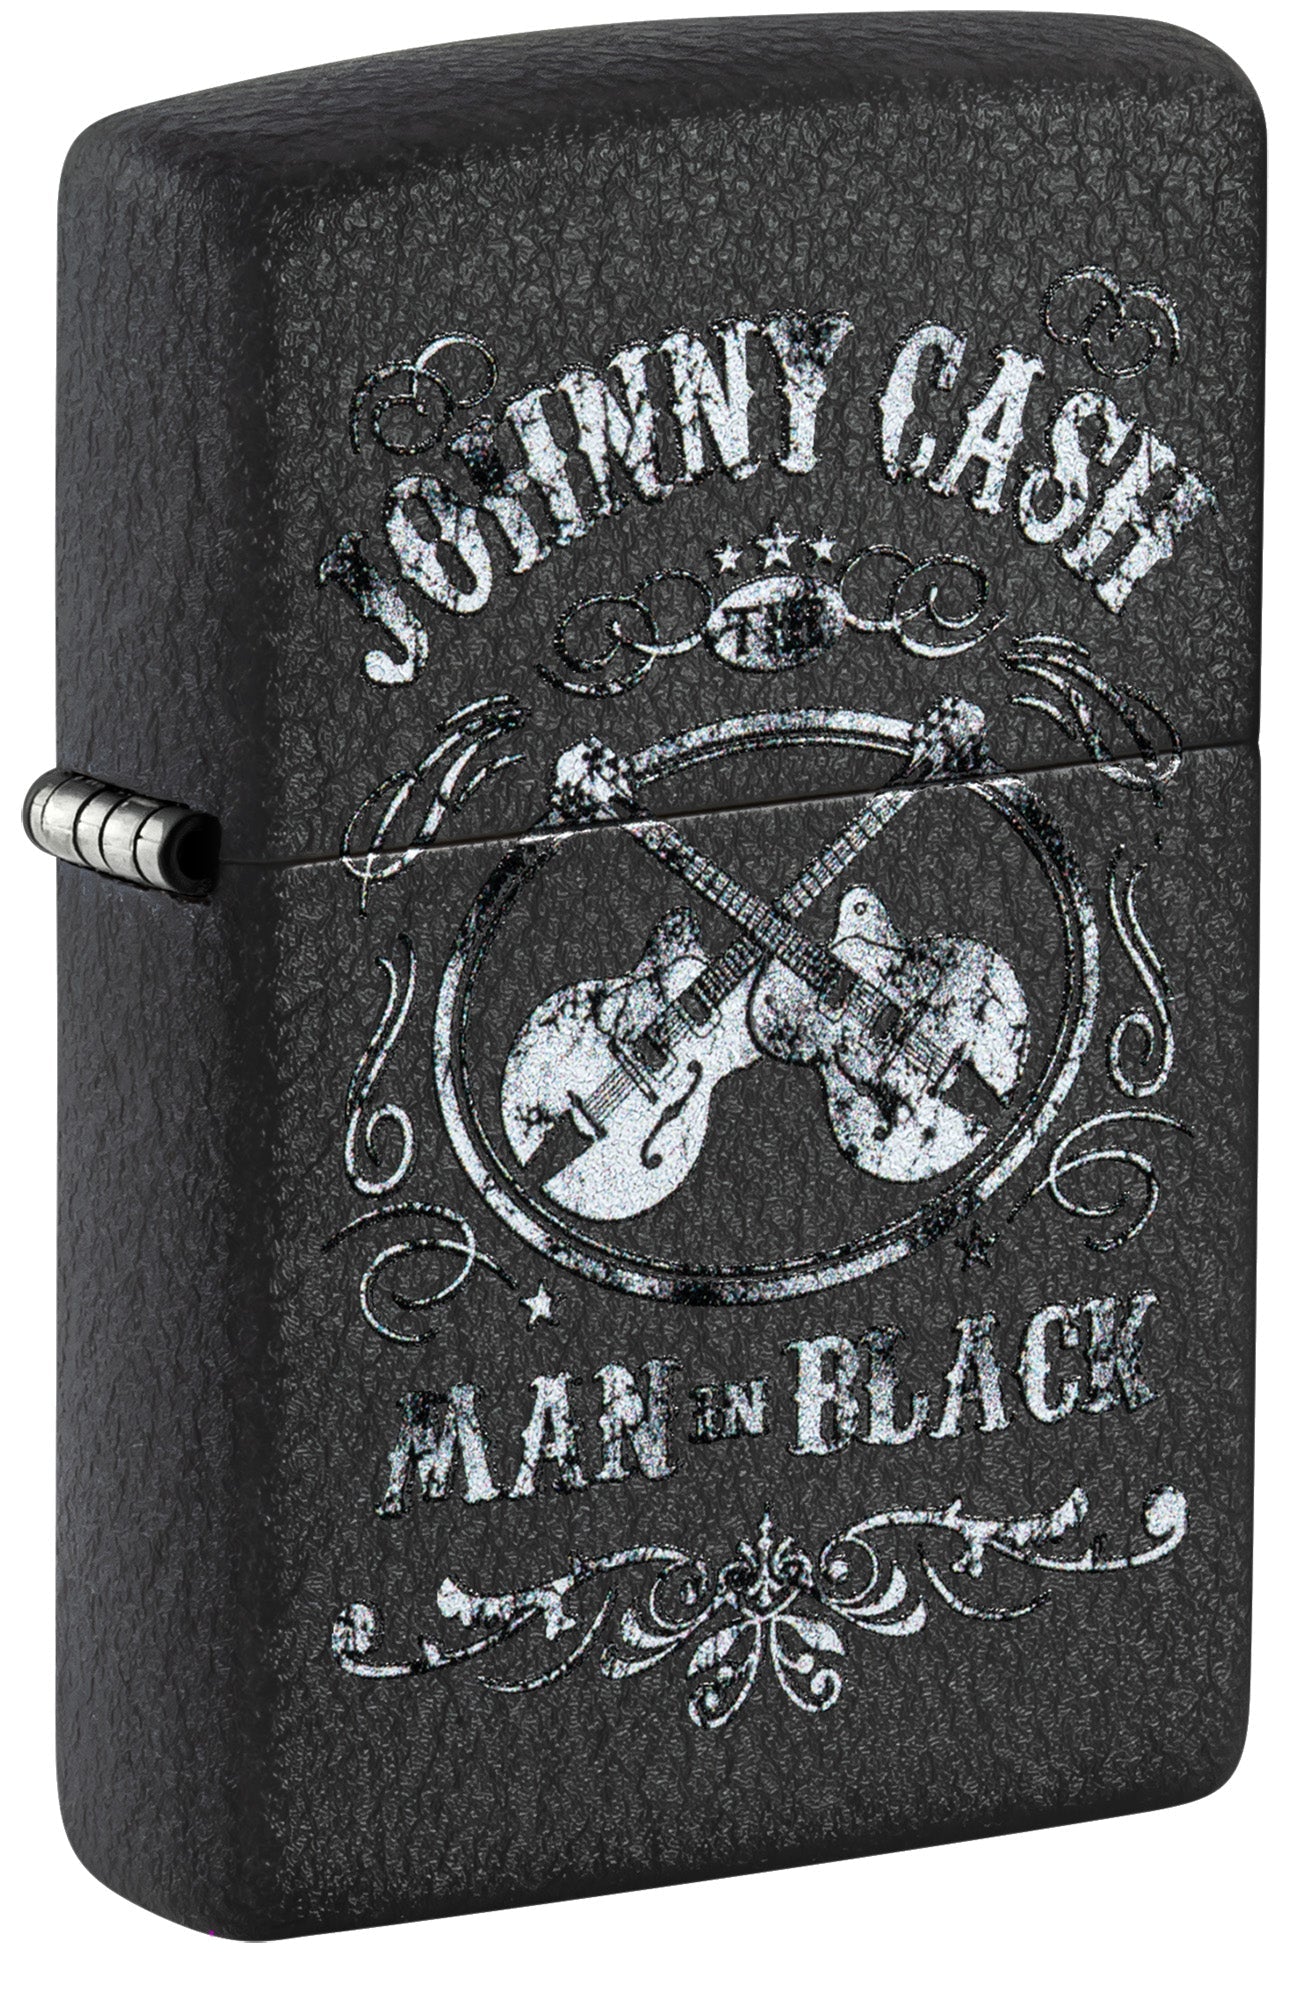 Zippo Lighter: Johnny Cash, The Man in Black - Black Crackle 48989